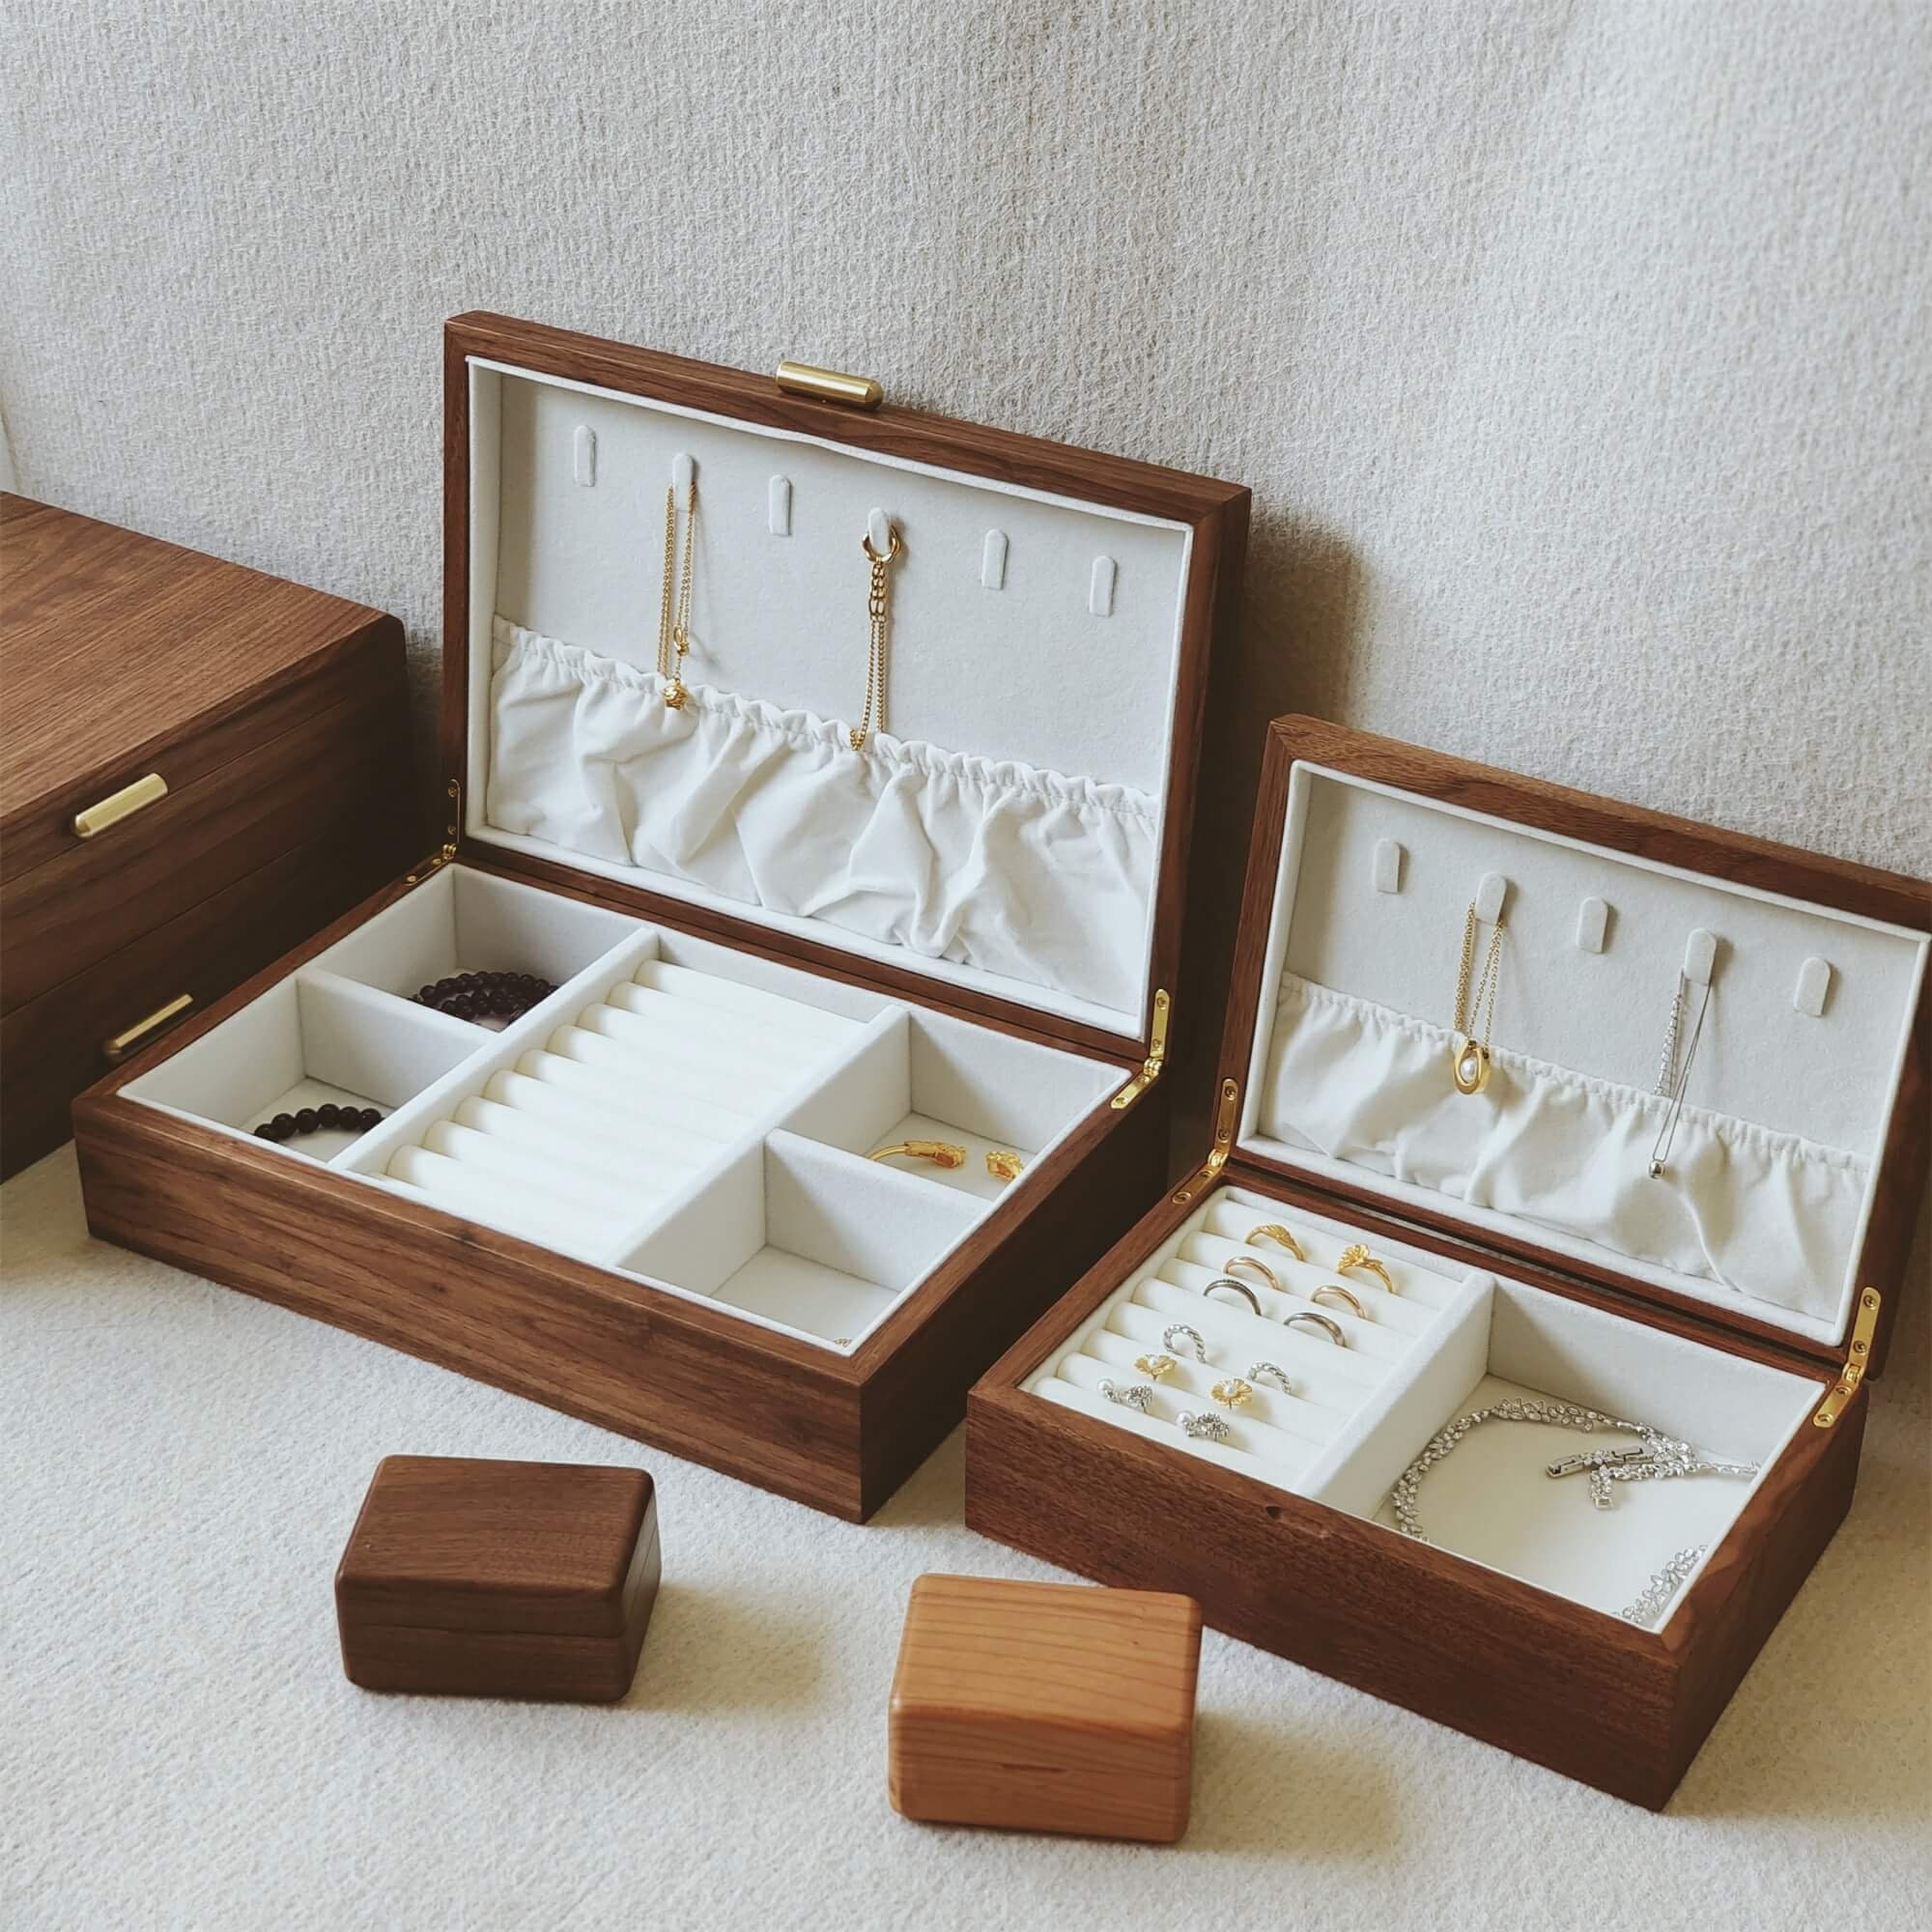 Solid Walnut Storage Box Wood Rectangular Jewelry Box With Lid